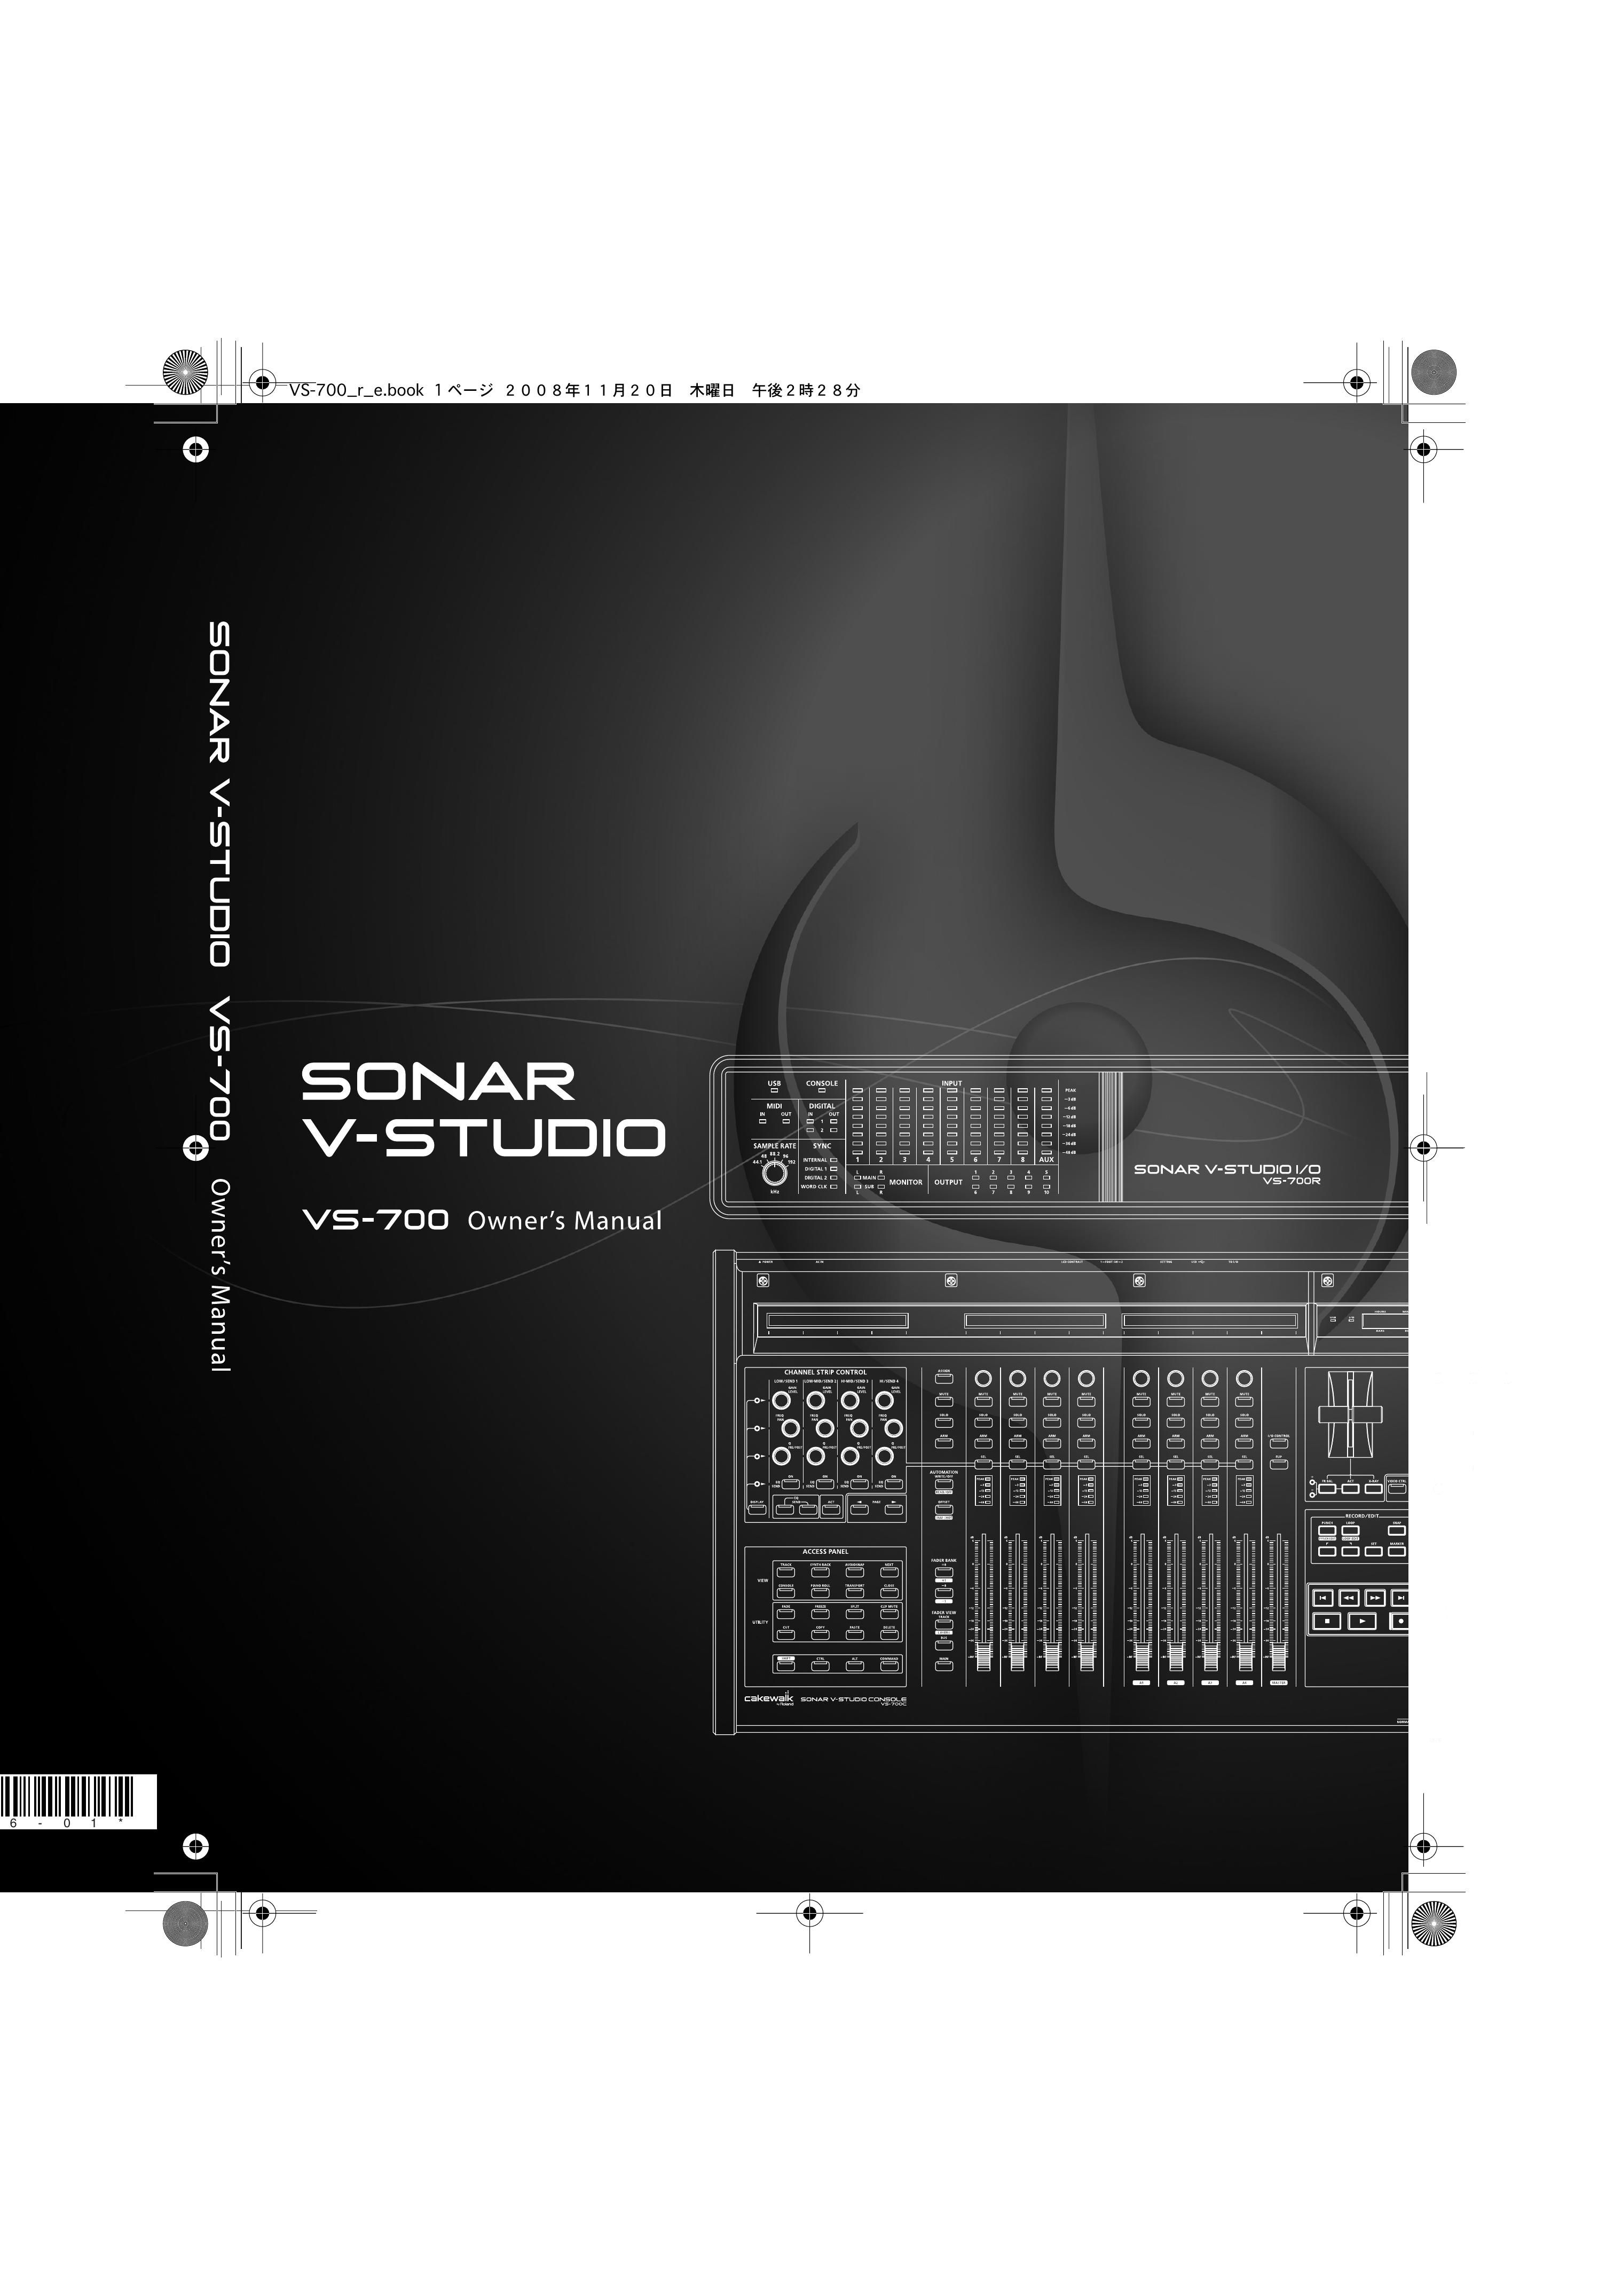 Roland VS-700 Music Mixer User Manual